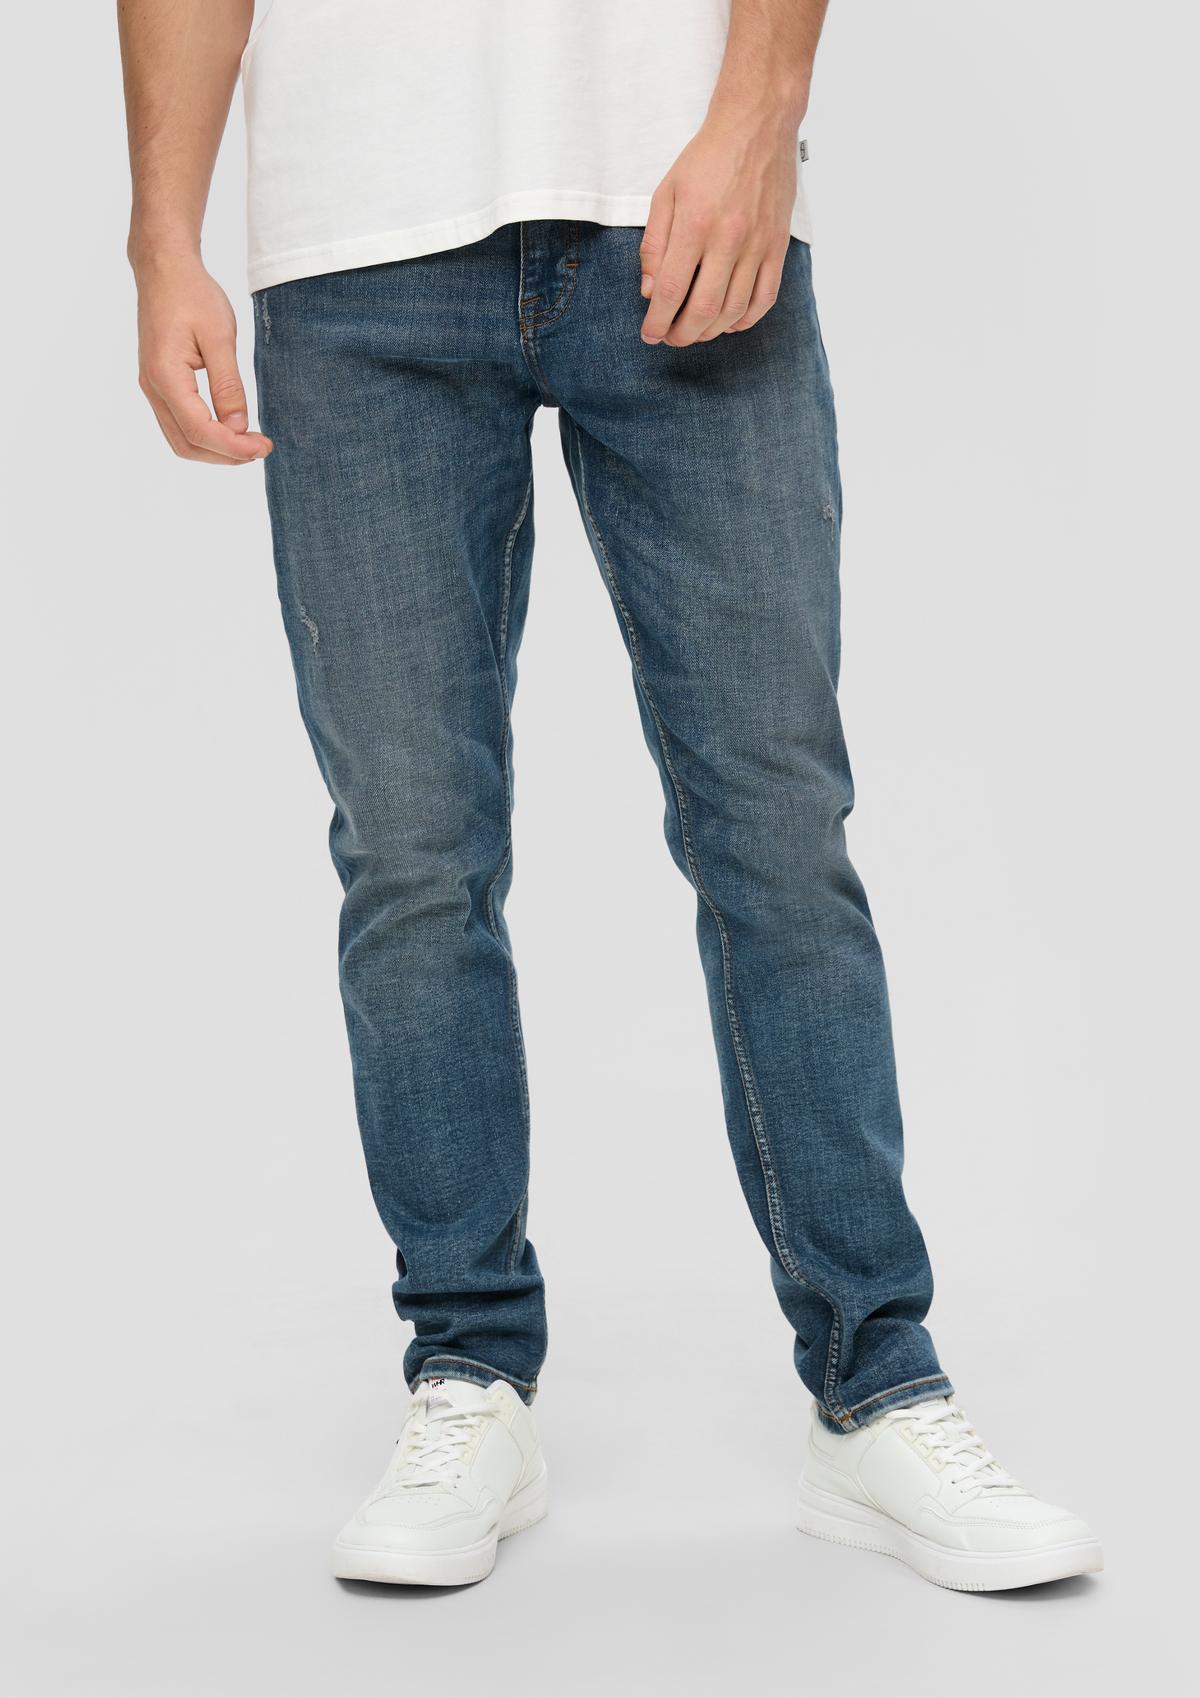 s.Oliver Shawn jeans / regular fit / mid rise / slim leg